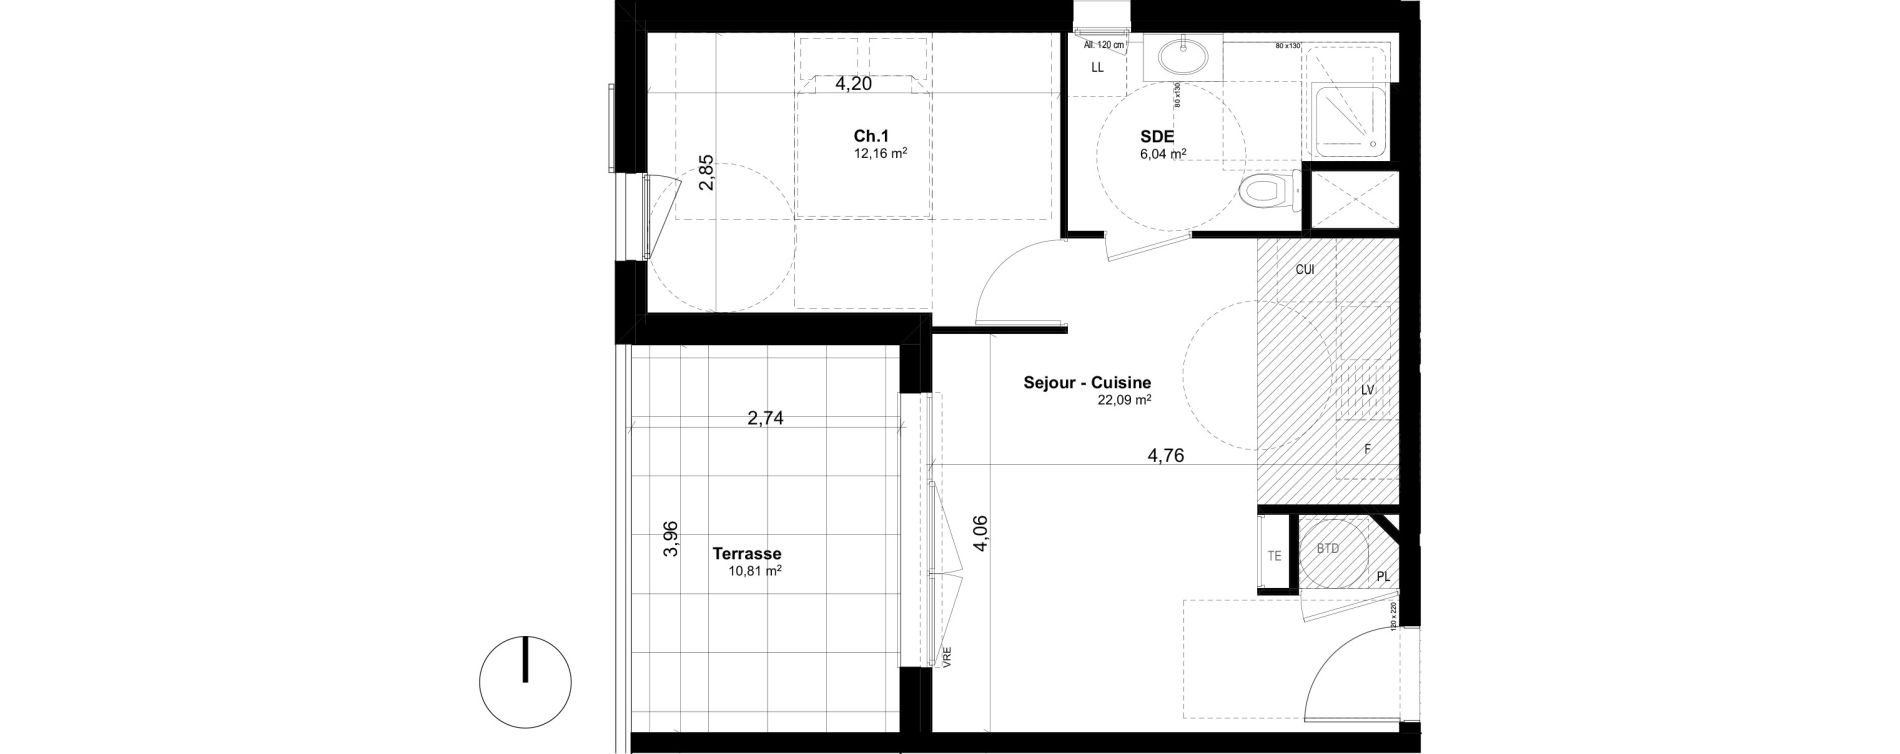 Appartement T2 de 40,29 m2 &agrave; Ventabren L heritiere